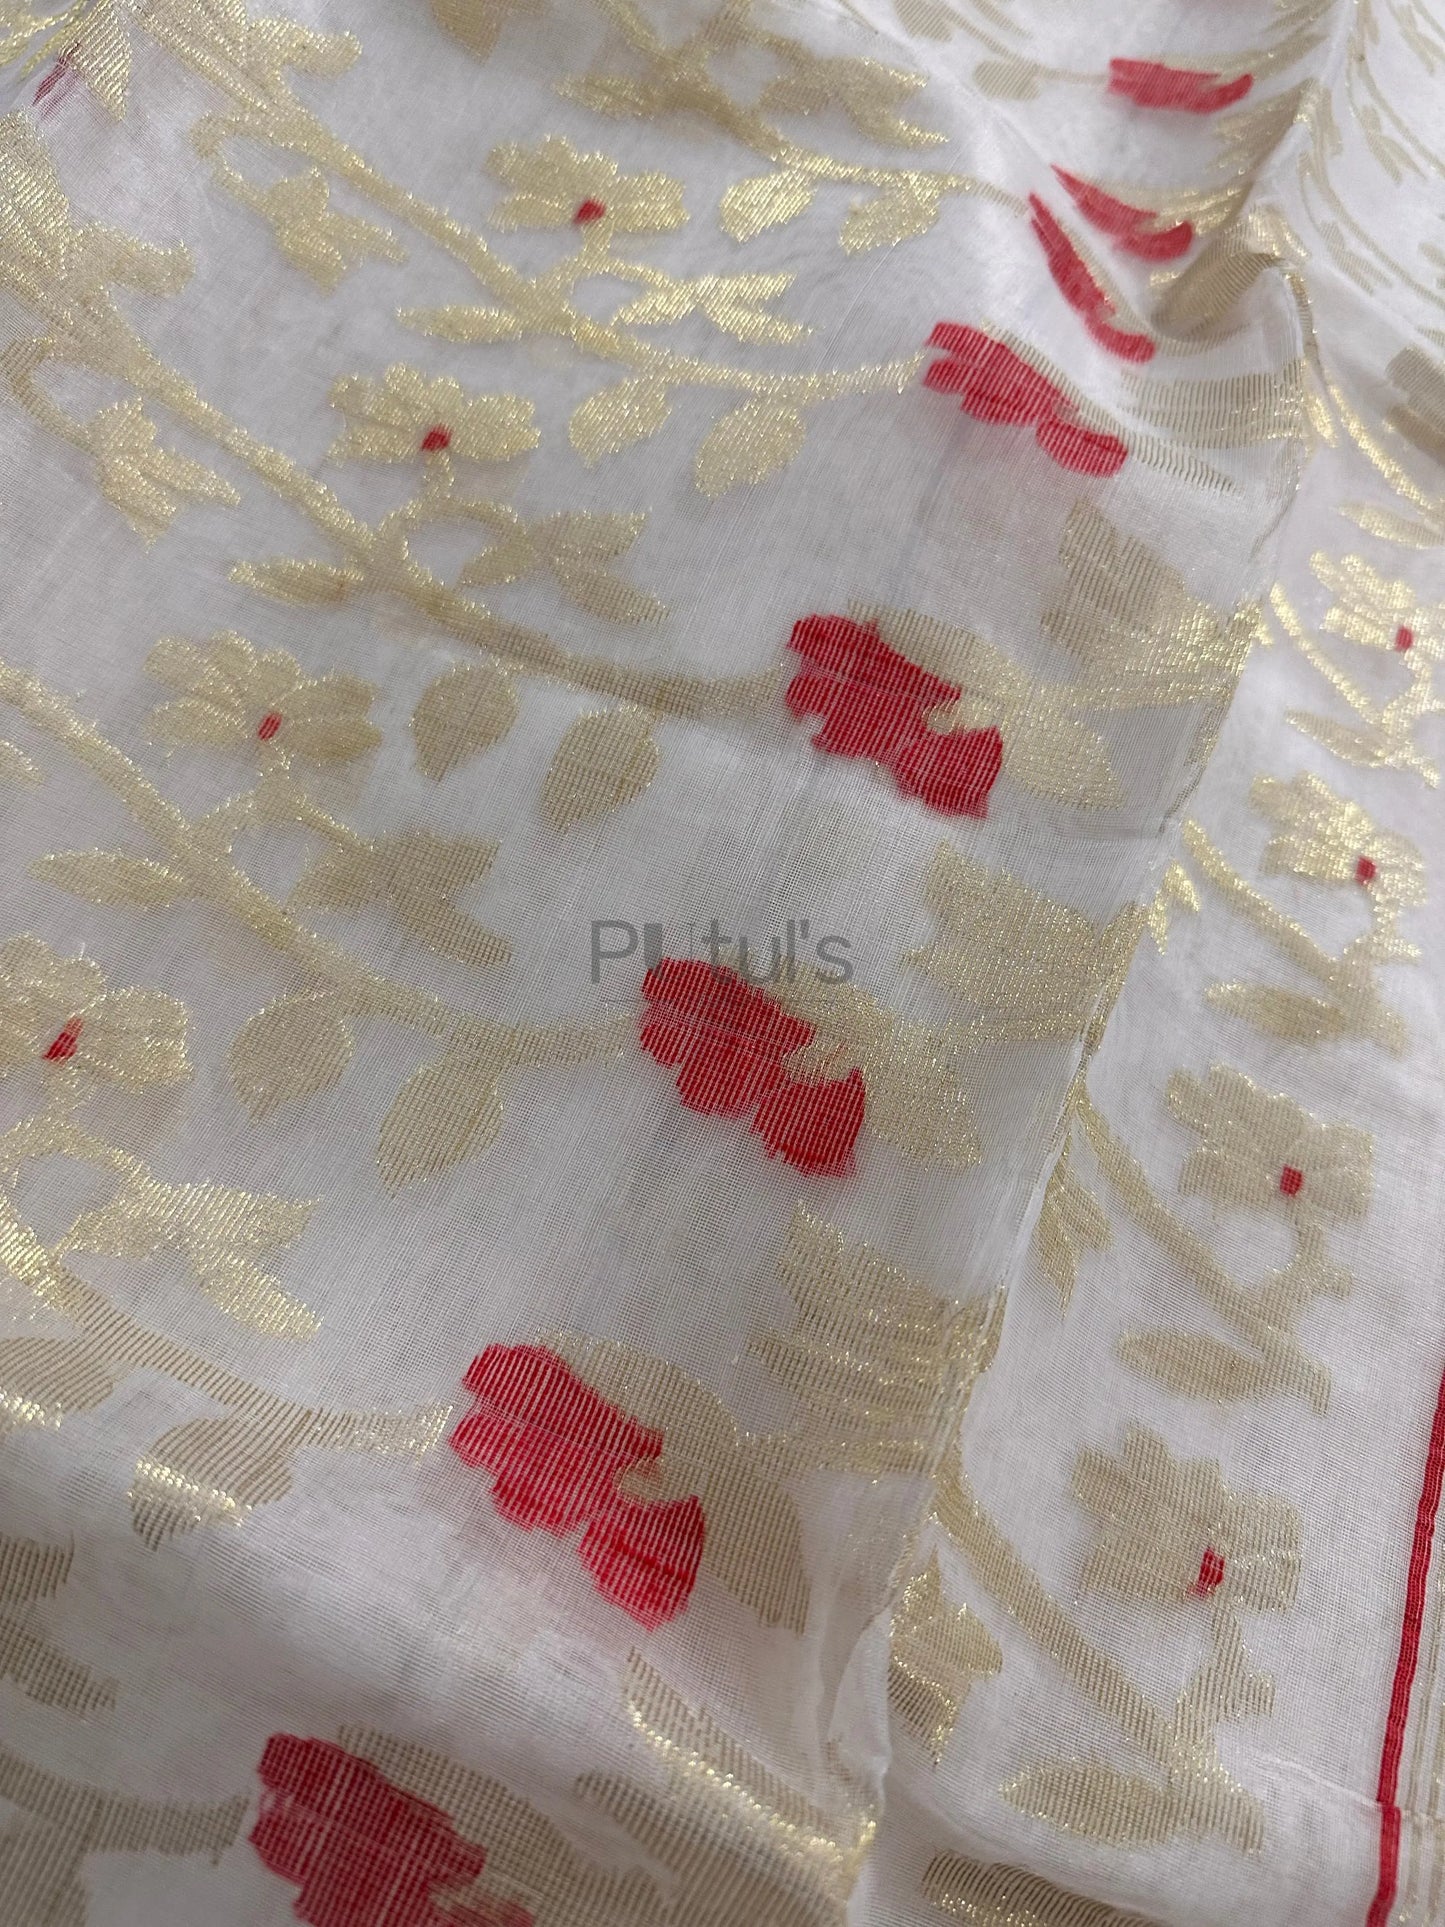 Handwoven pure white coloured Muslin saree with red minakari Putul's Fashion